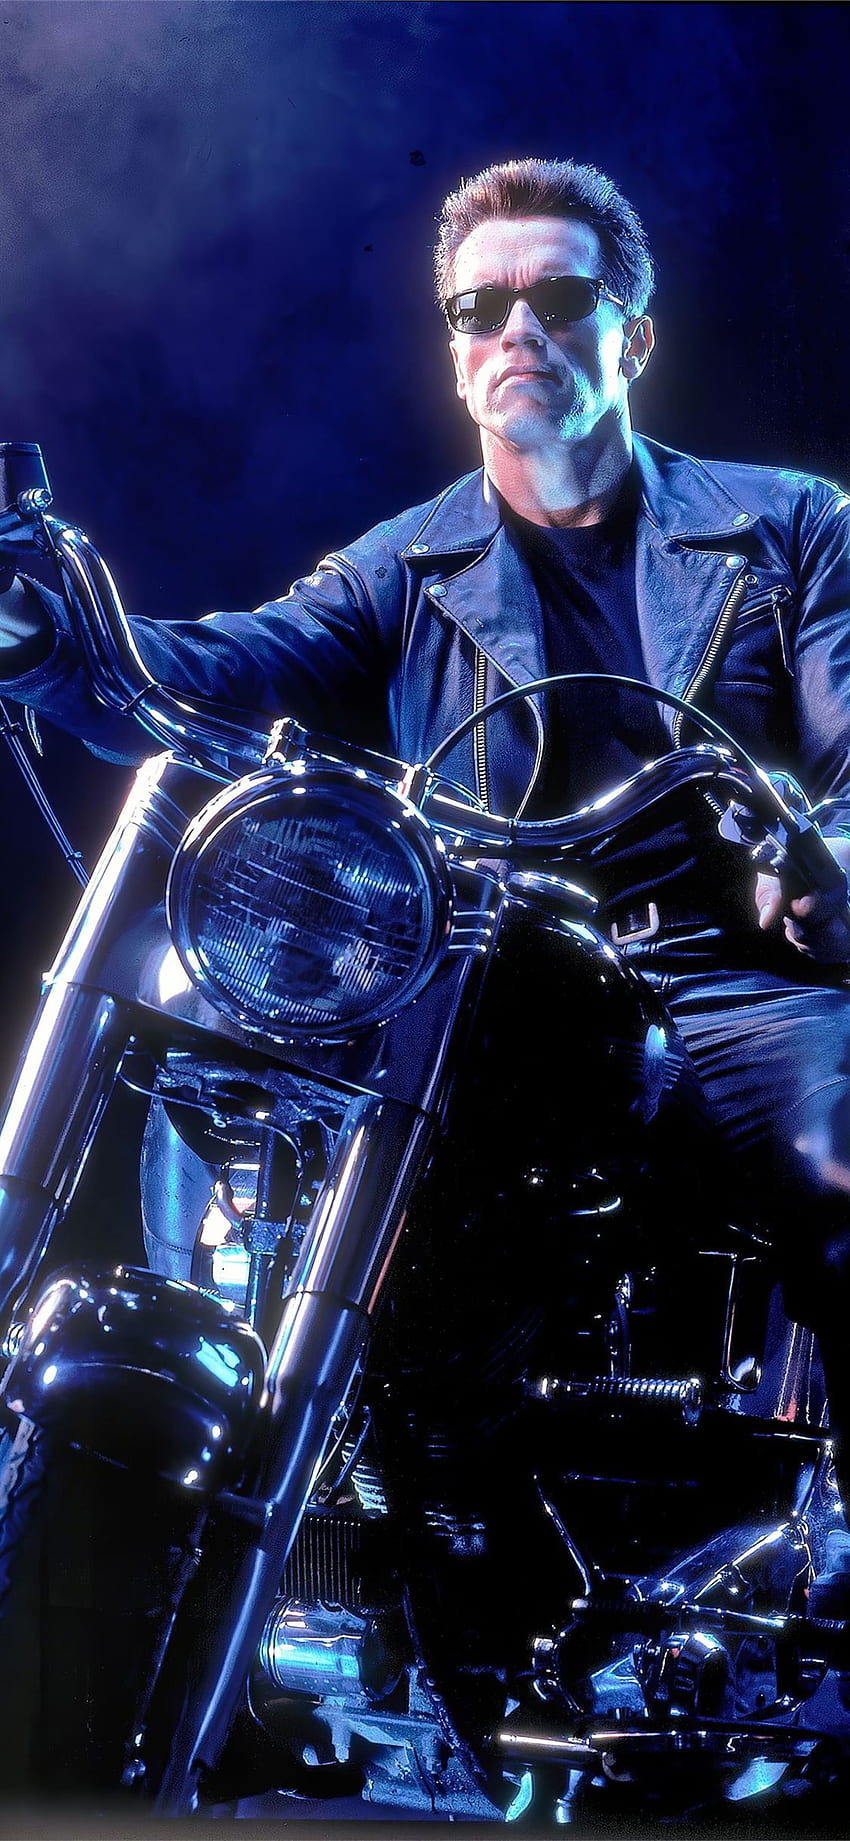 el terminador en bicicleta iPhone X, Arnold Schwarzenegger Terminator fondo de pantalla del teléfono